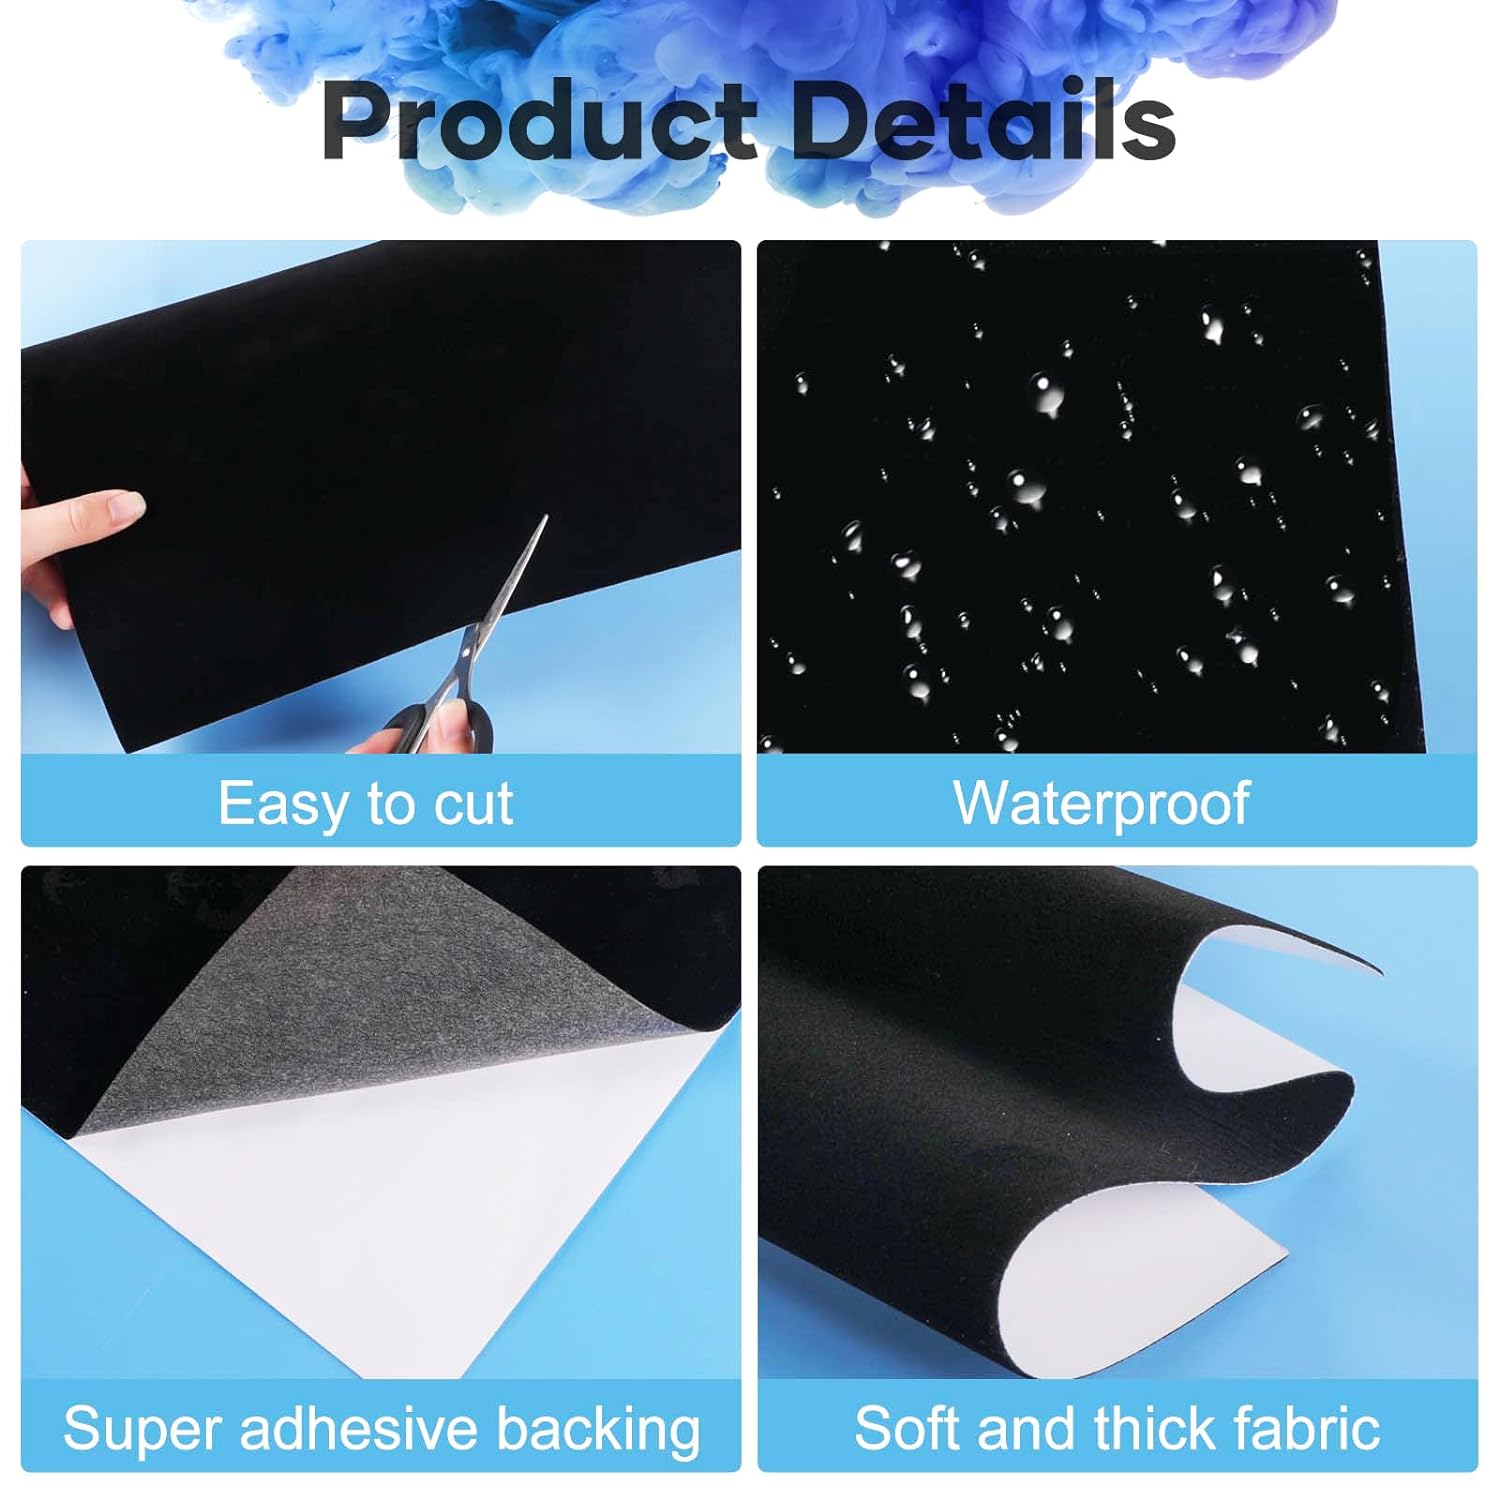 Great Choice Products Black Felt Fabric - 10Pcs Self Adhesive Felt Sheets With Adhesive Backing, Soft Black Velvet Felt Drawer Liner For Art & Craf…